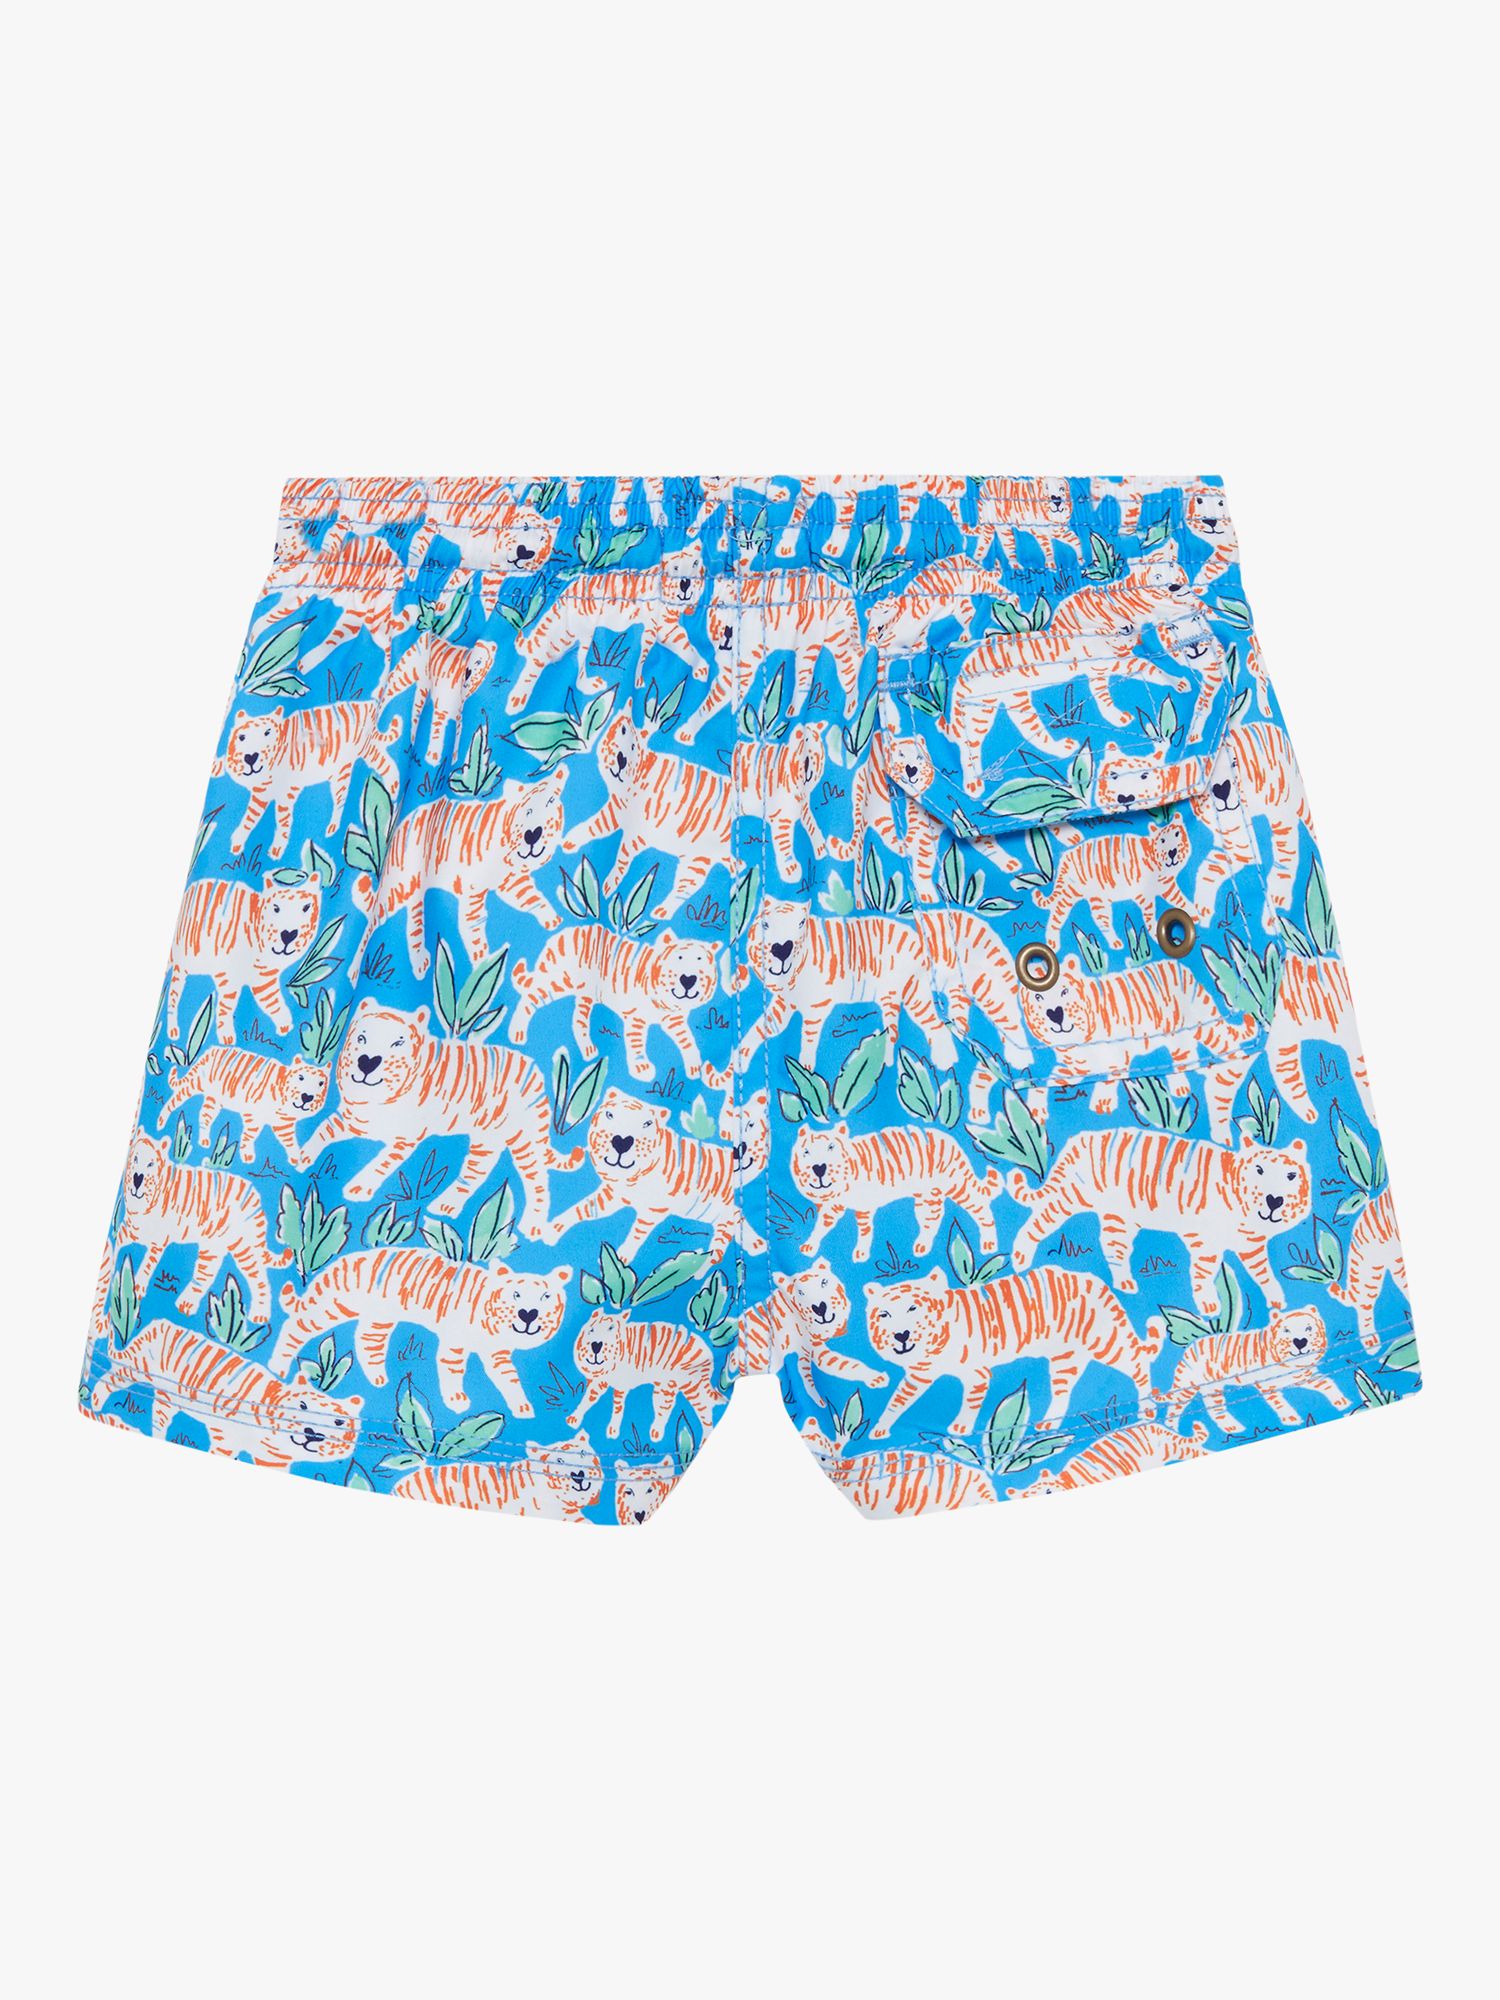 Trotters Baby Tiger Swim Shorts, Aqua Blue, 3-6 months